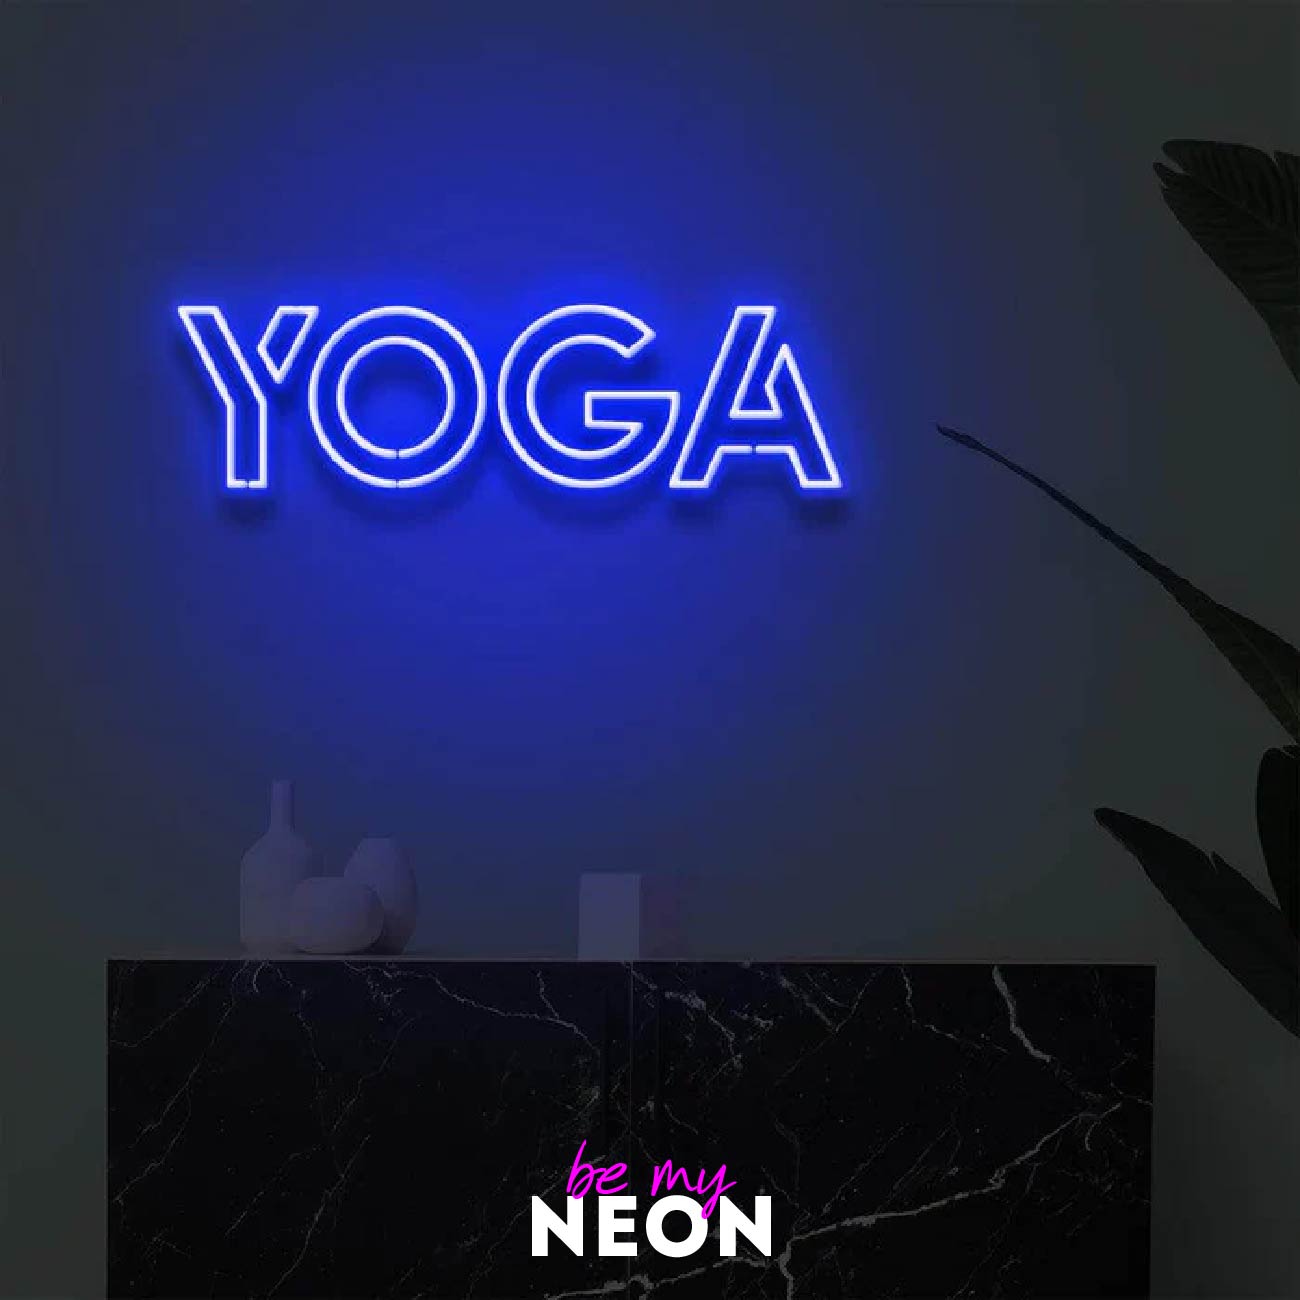 "YOGA" LED Neonschild